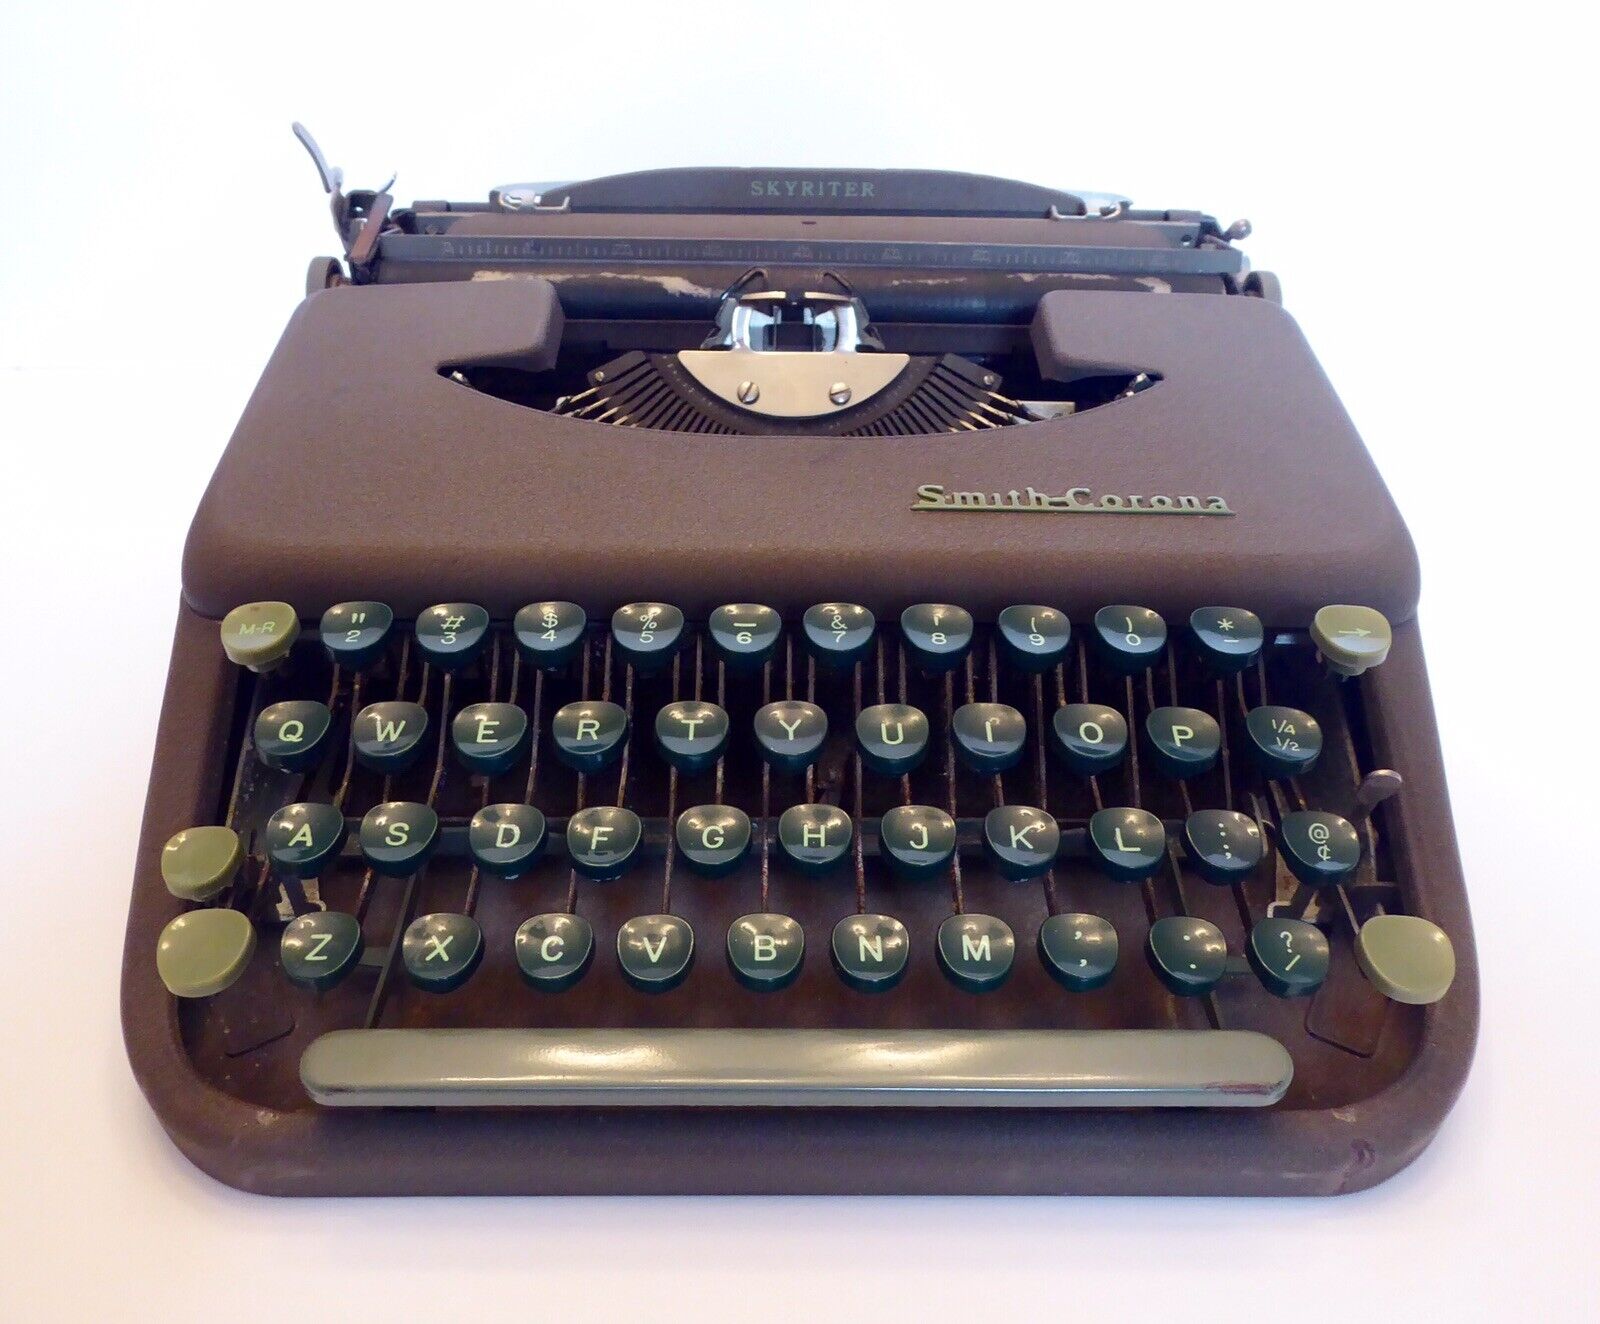 Vintage Smith Corona Skyriter Lightweight Portable Typewriter c. 1950s